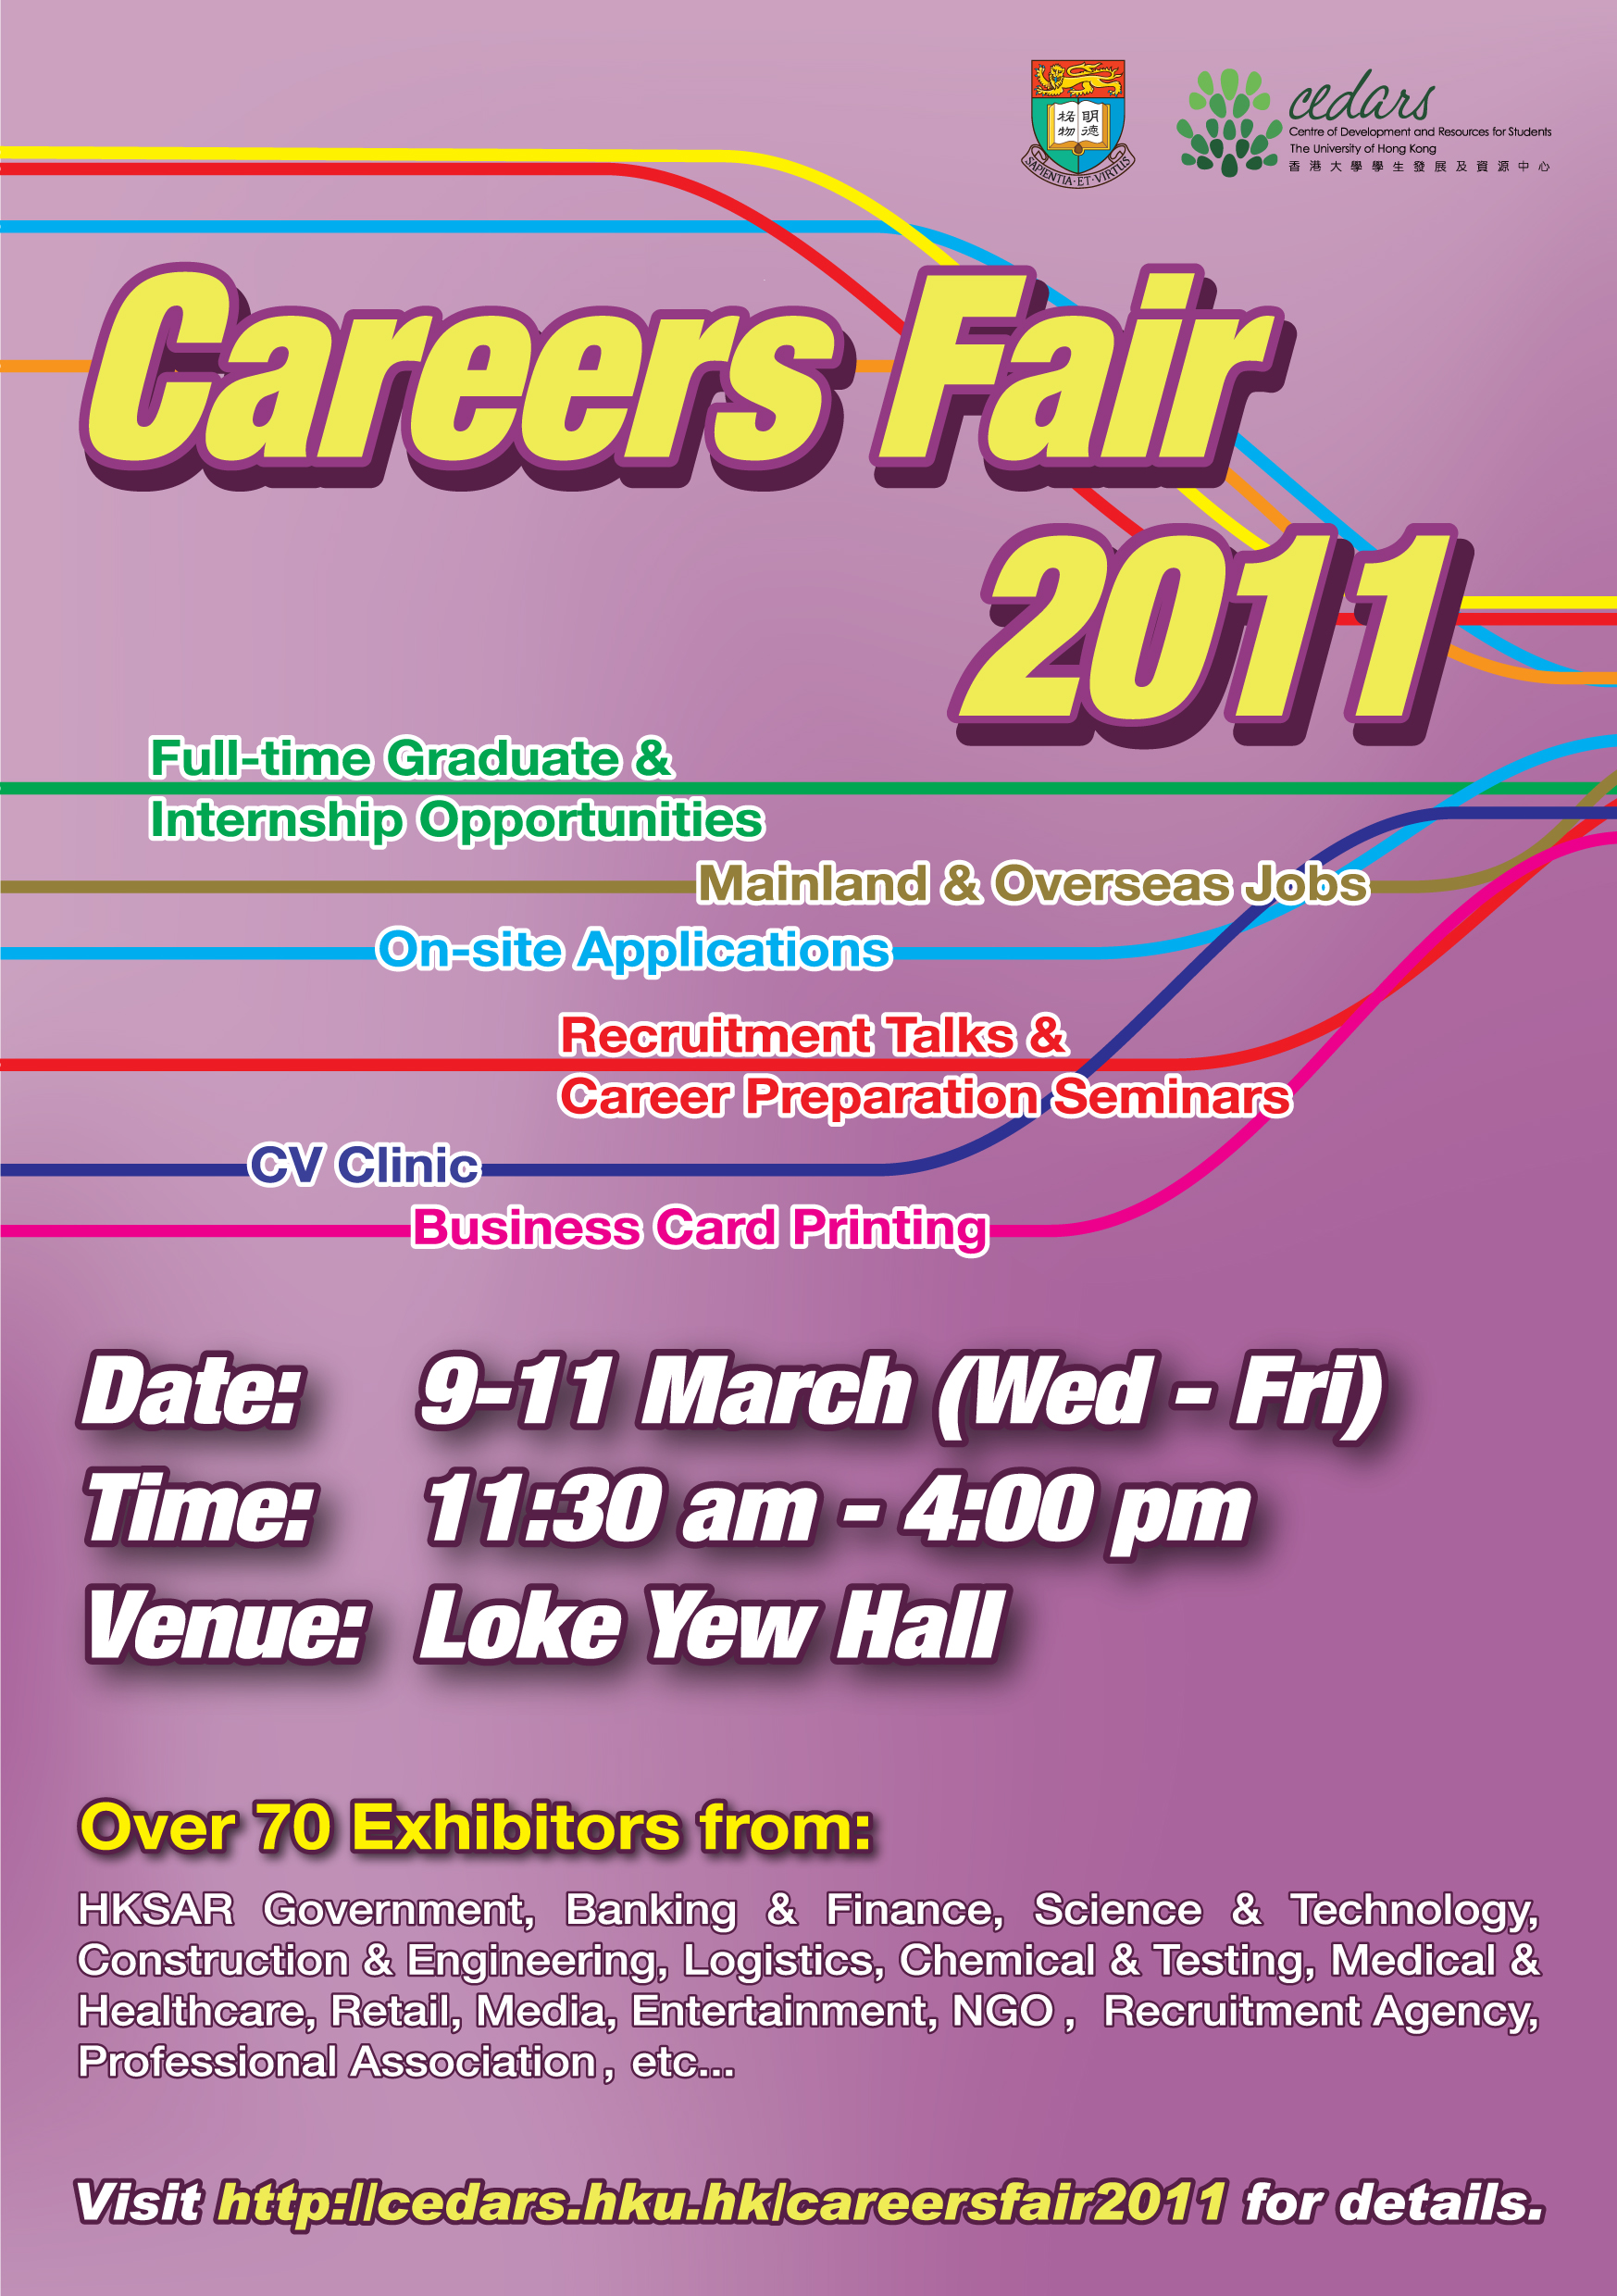 HKU Careers Fair 2011 (9-11 March)